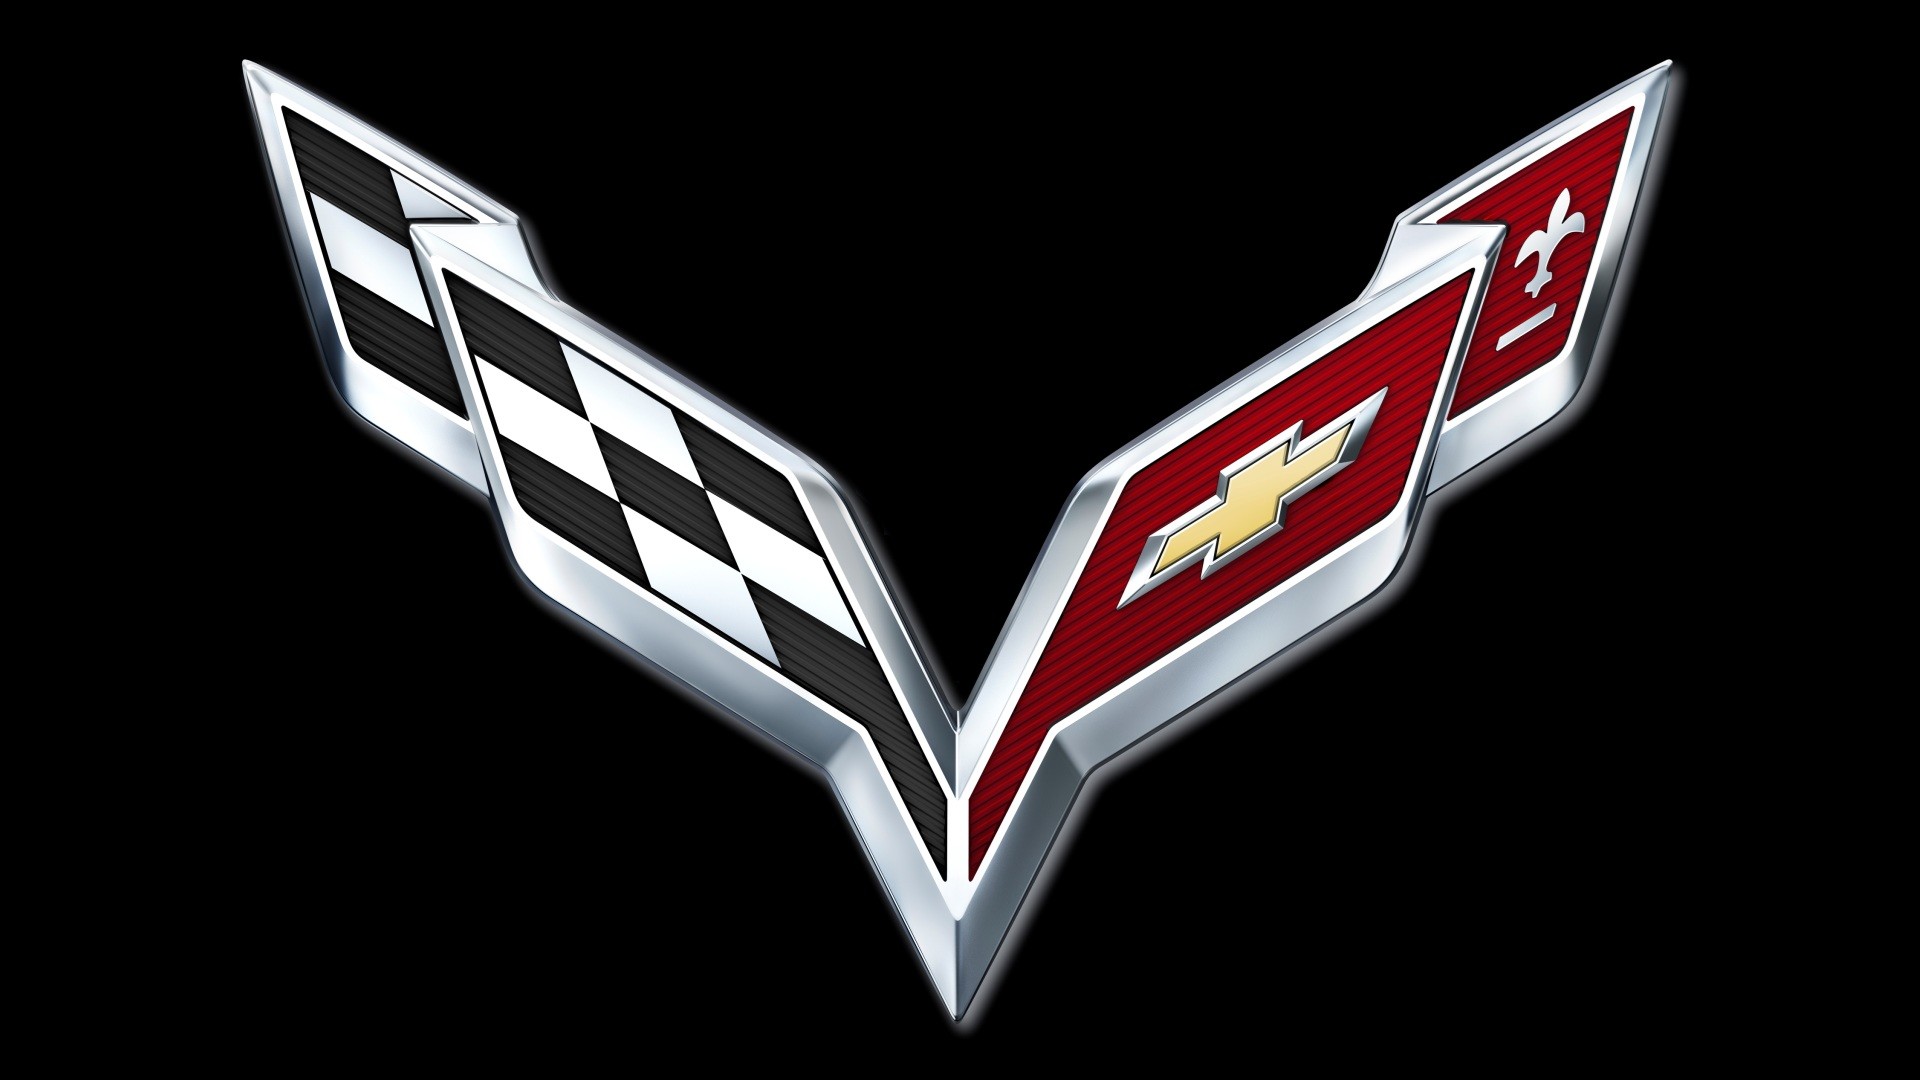 1920x1080 Corvette Logo Wallpapers 1080p with High Definition Wallpaper  px  213.88 KB Logo Stingray 2014 C6